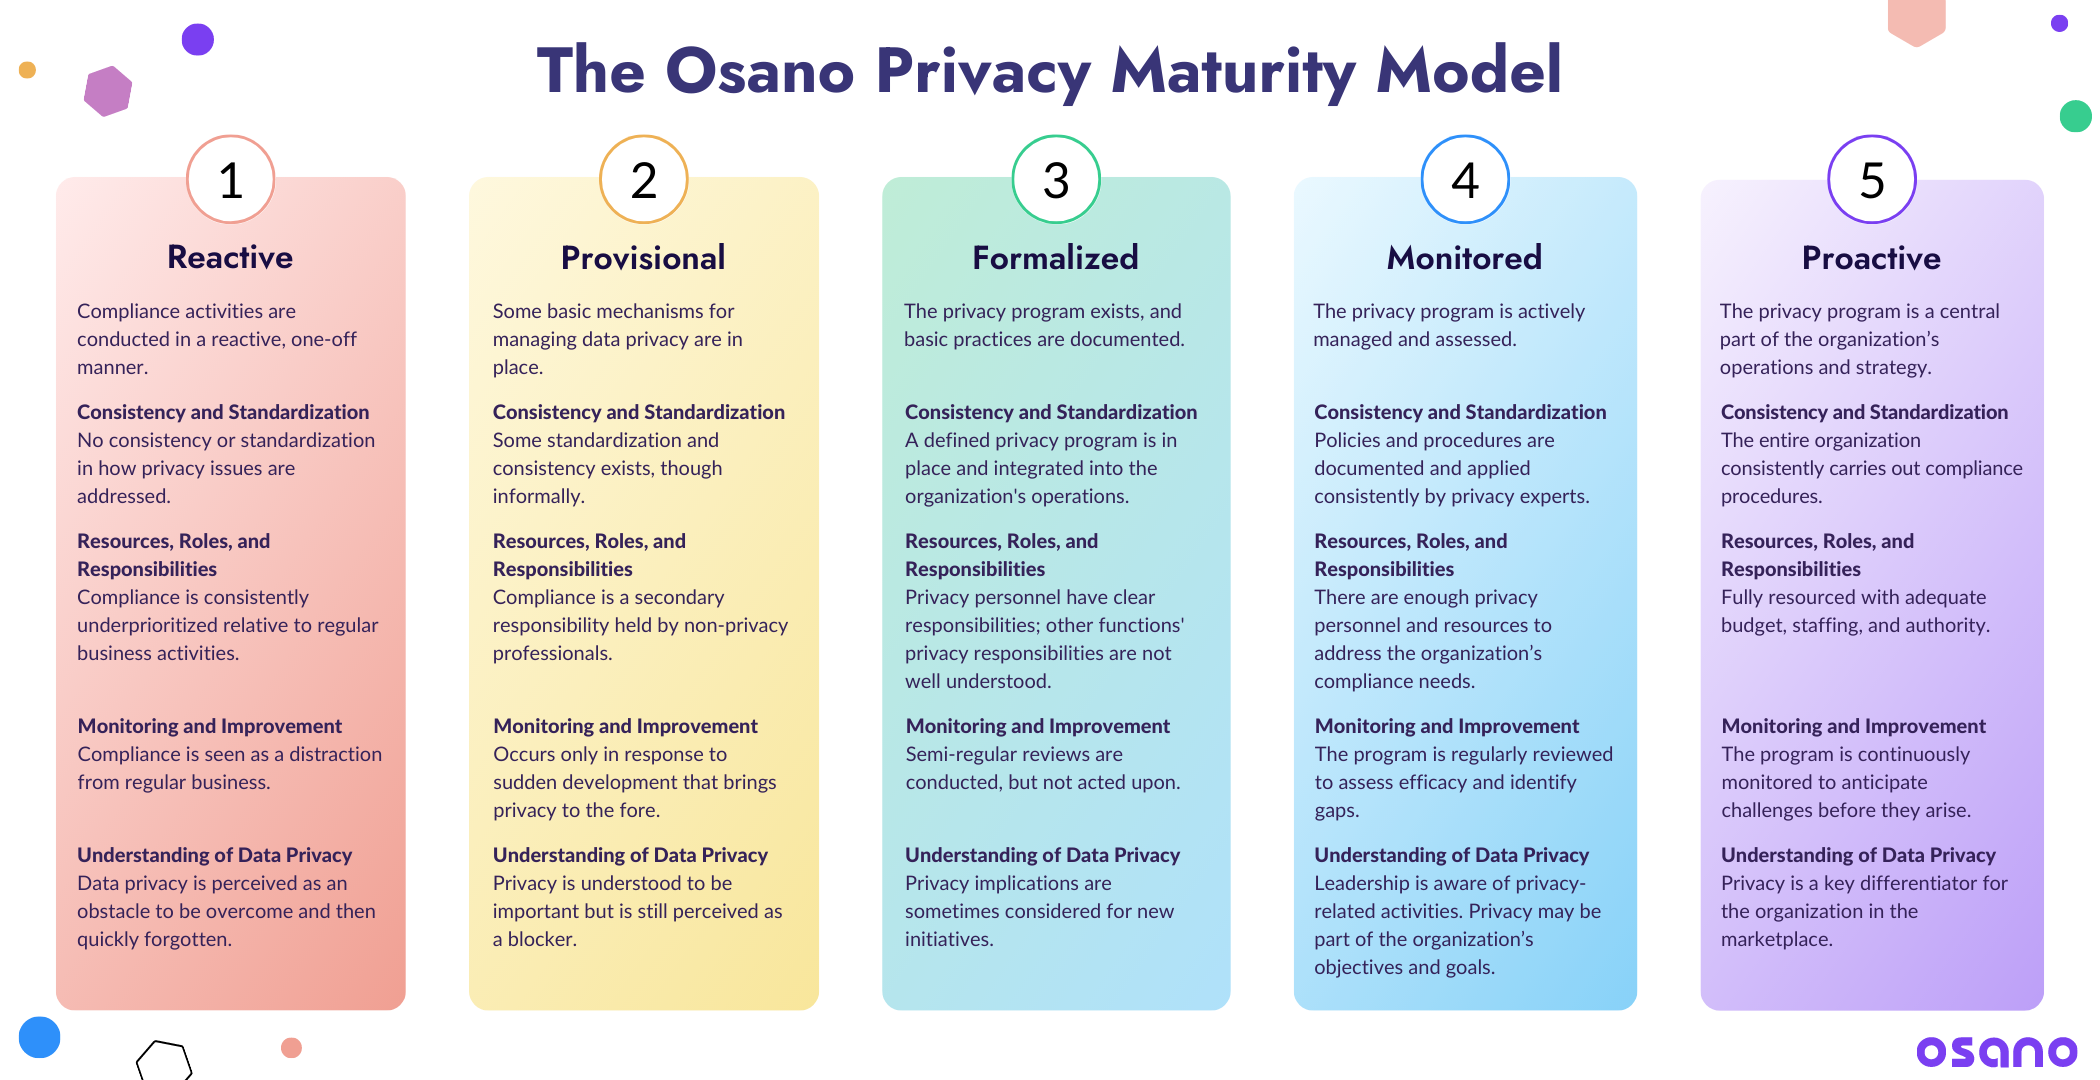 Privacy Maturity Model - Model Itself